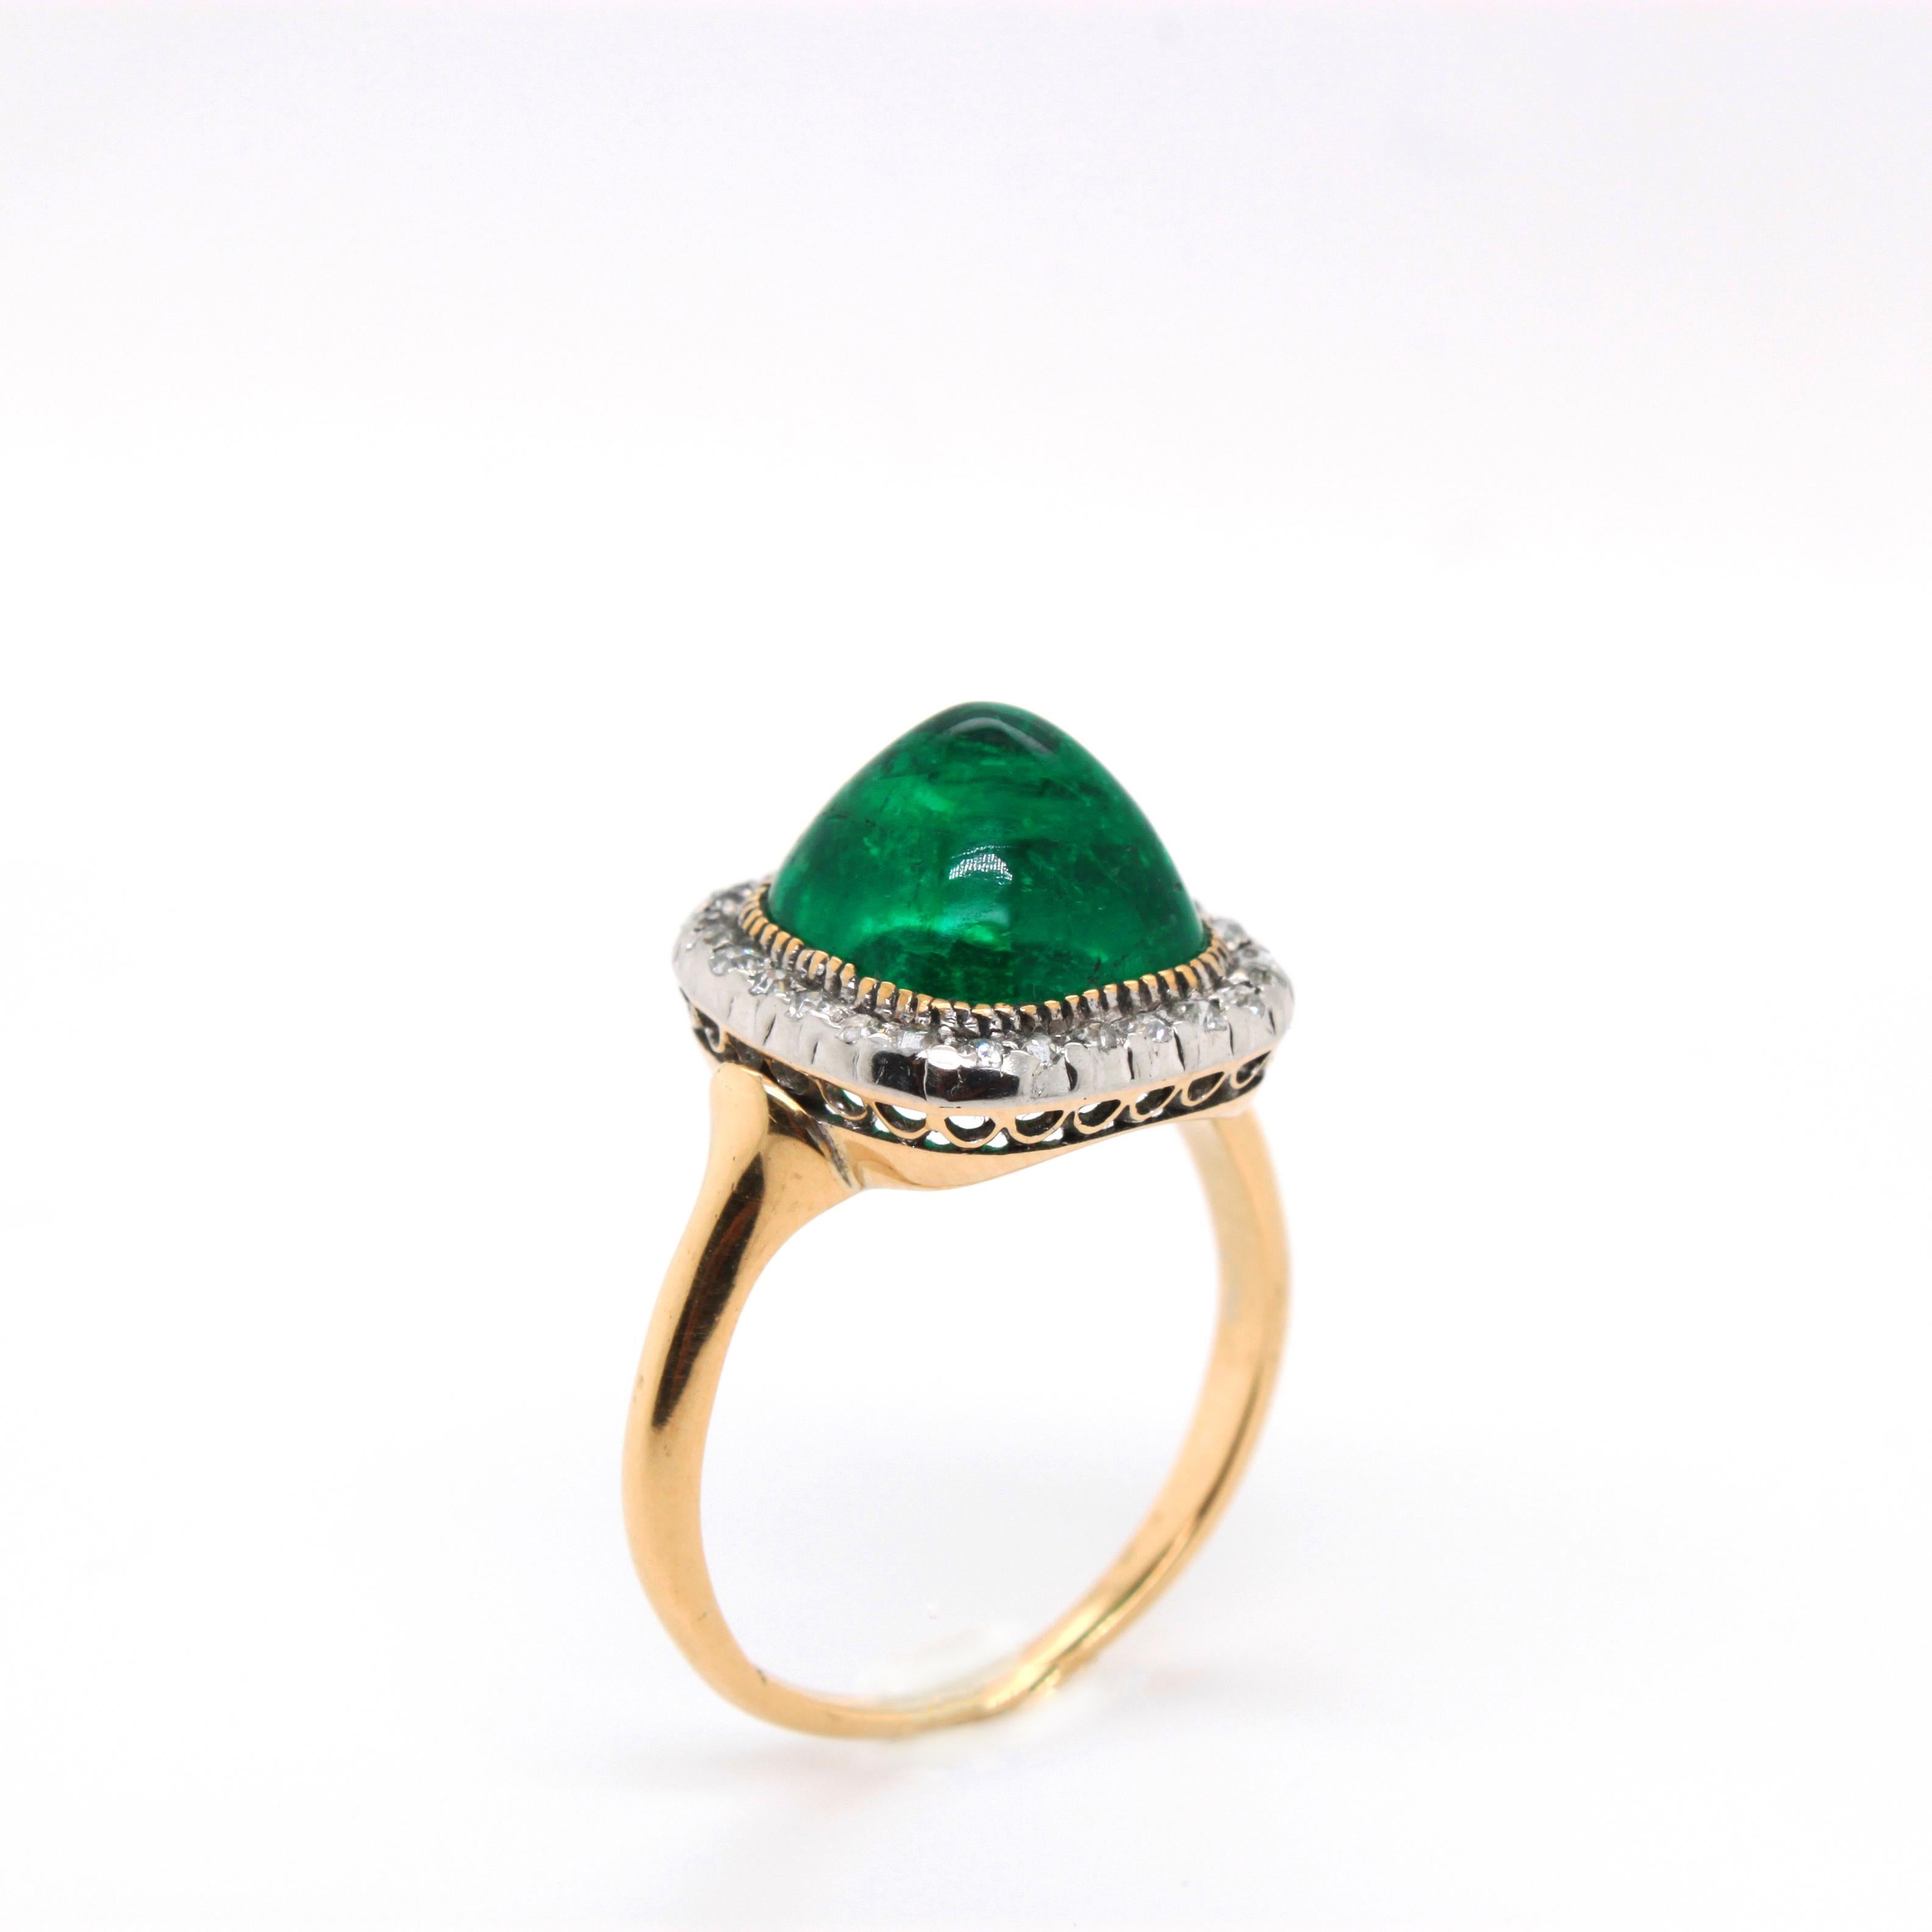 Emerald Cut Victorian Colombian Sugarloaf Emerald and Diamond Ring, circa 1890s